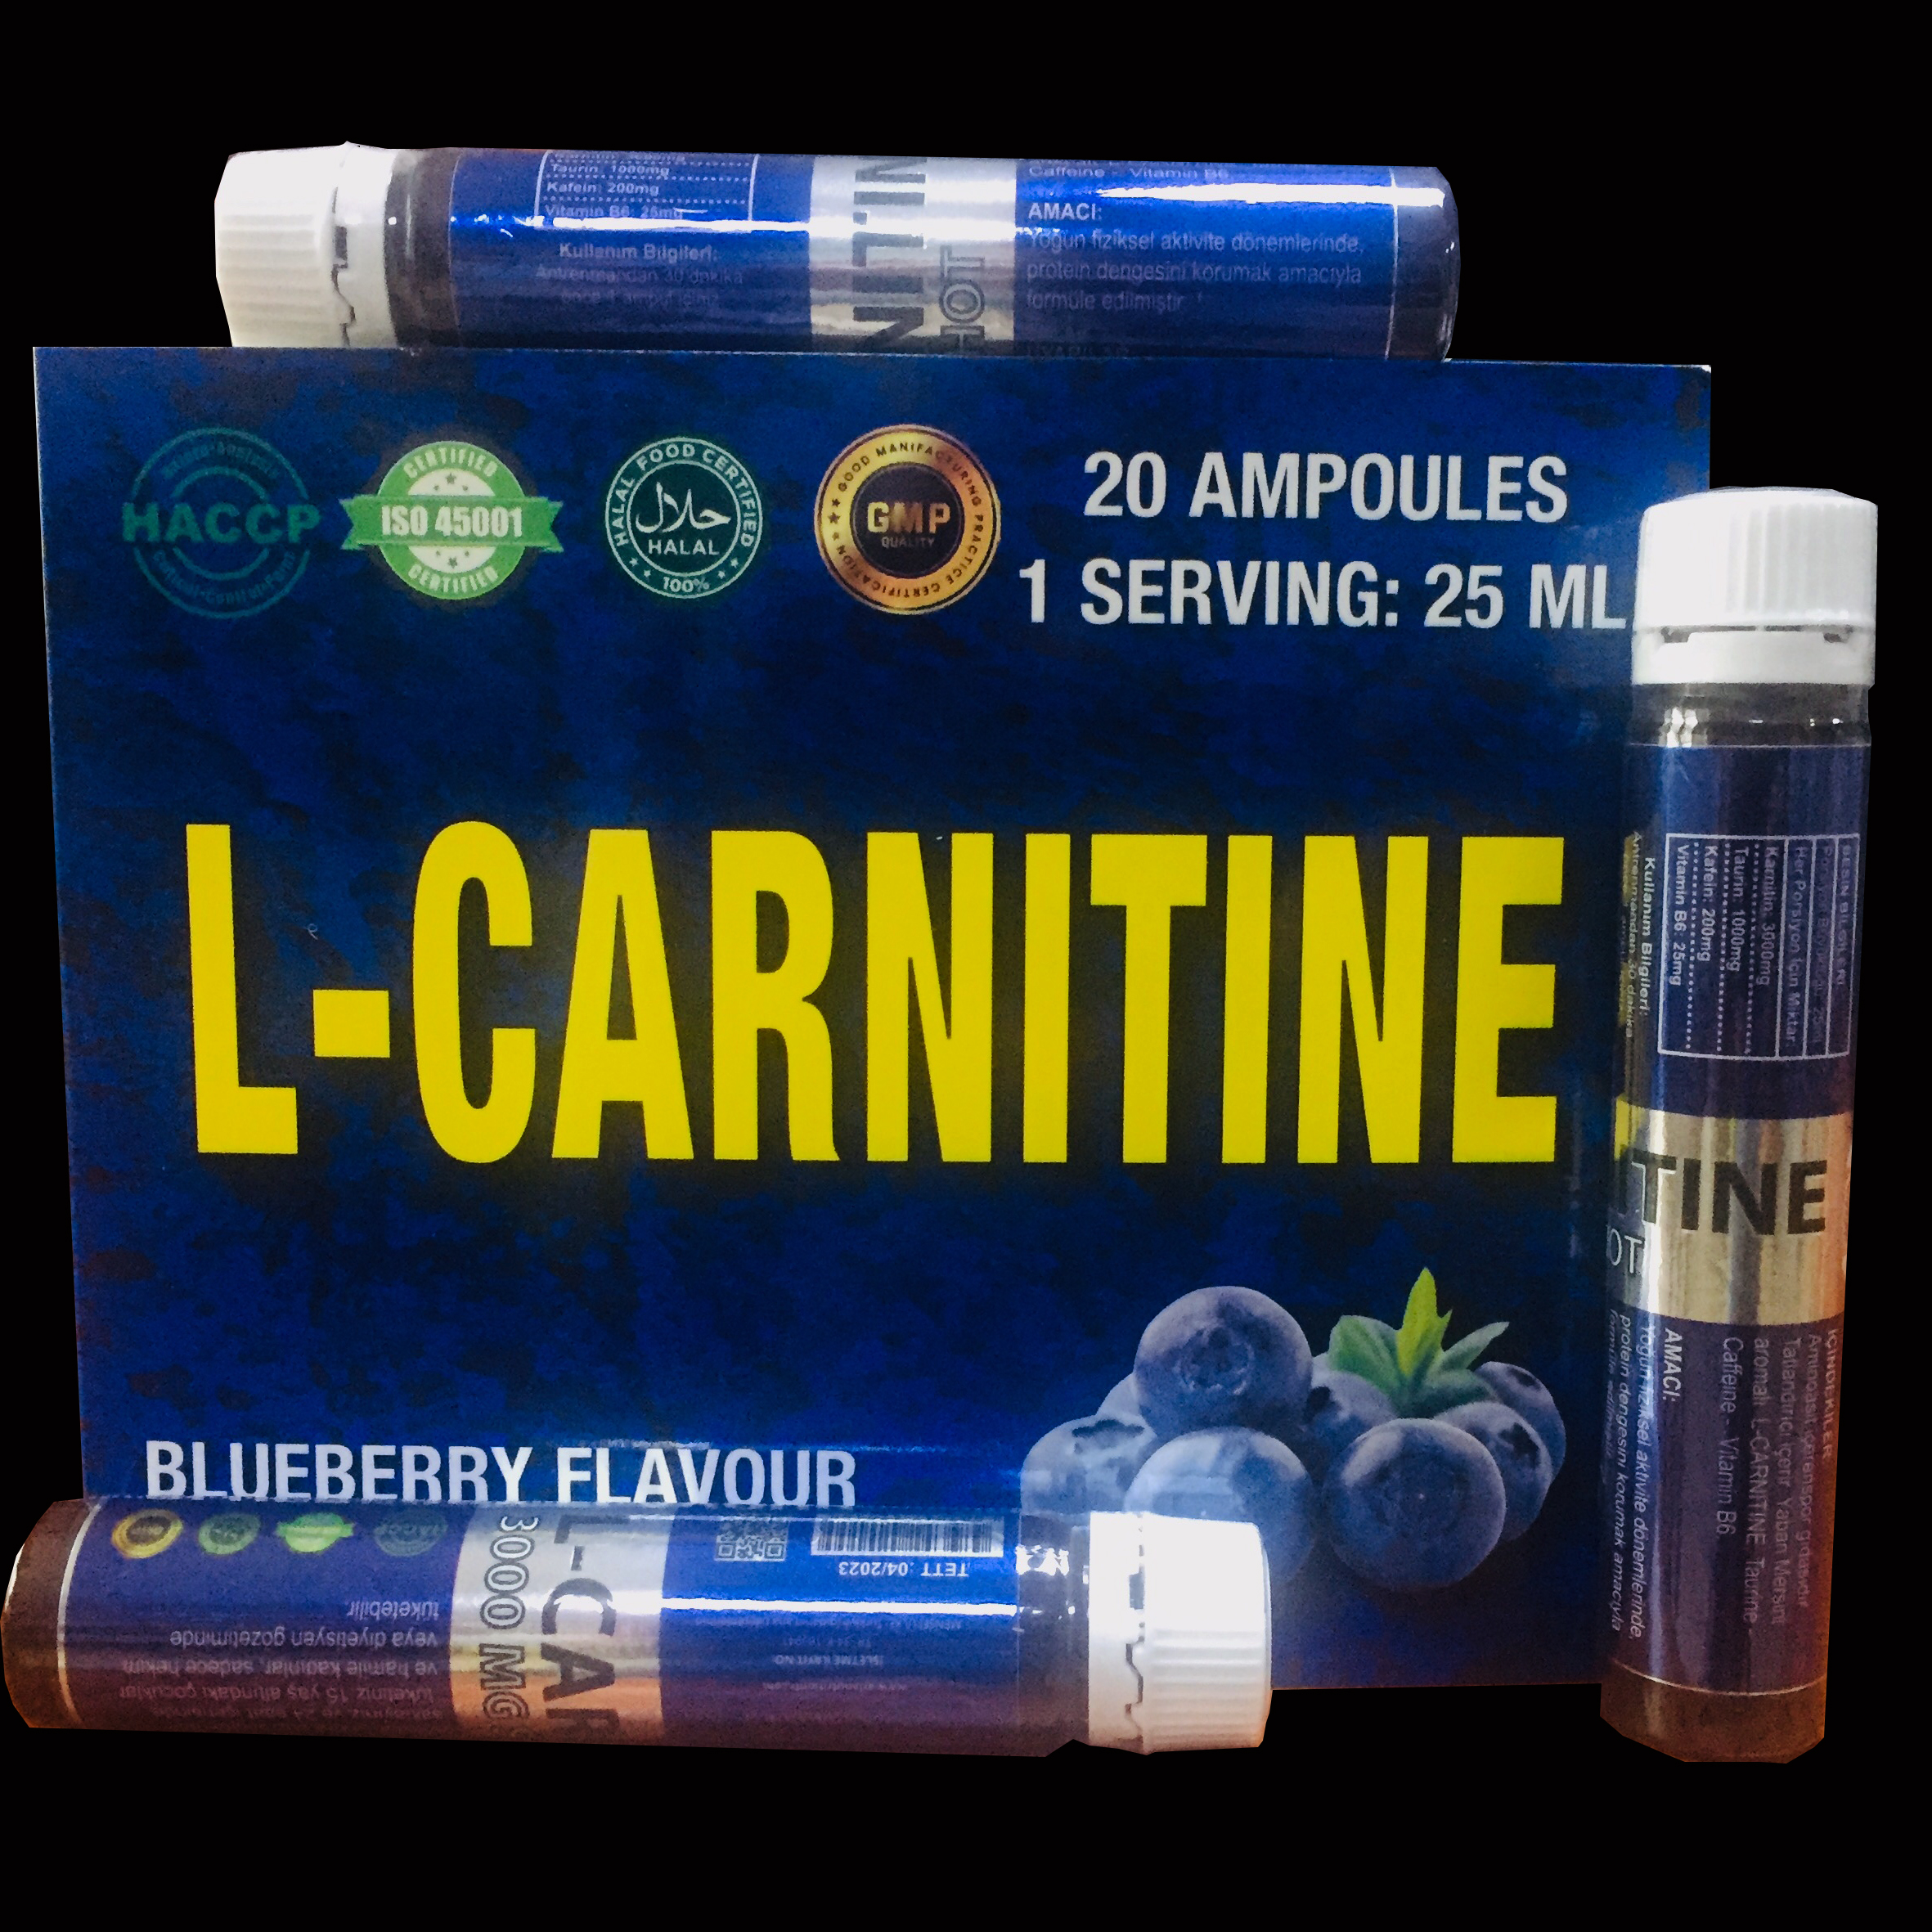 Lcarnitine arianutrition 20 ampül